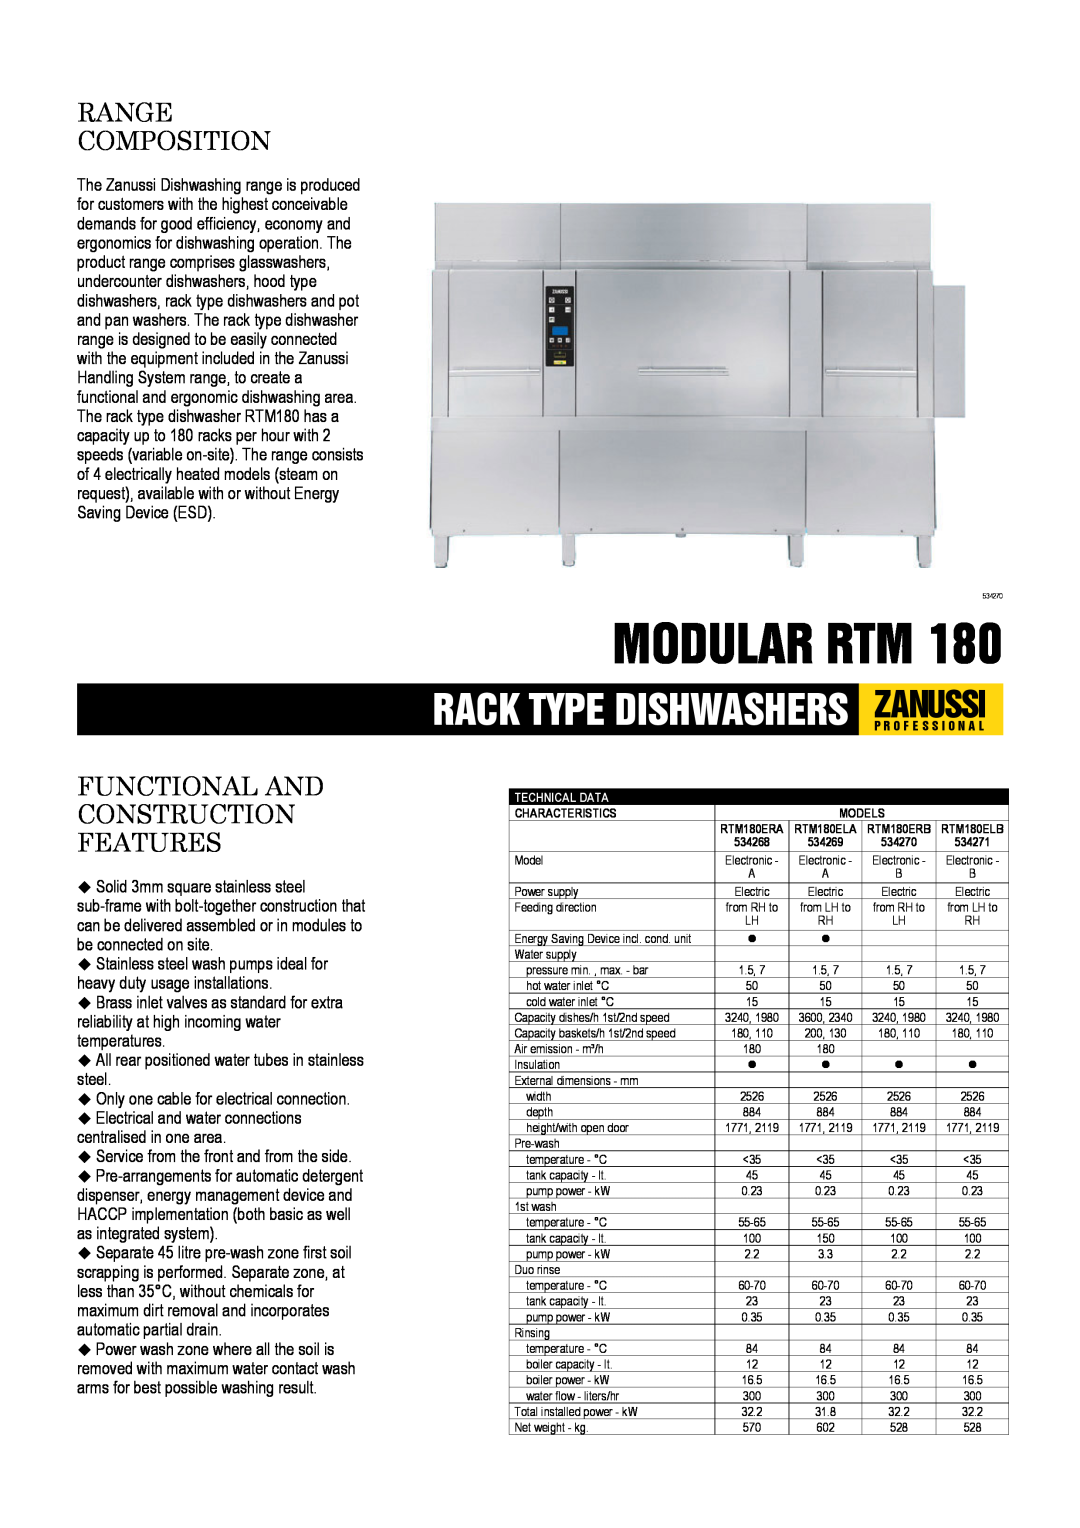 Zanussi RTM180ELB, RTM180ERB, RTM180ELA dimensions Modular Rtm, Range Composition, Functional And Construction Features 